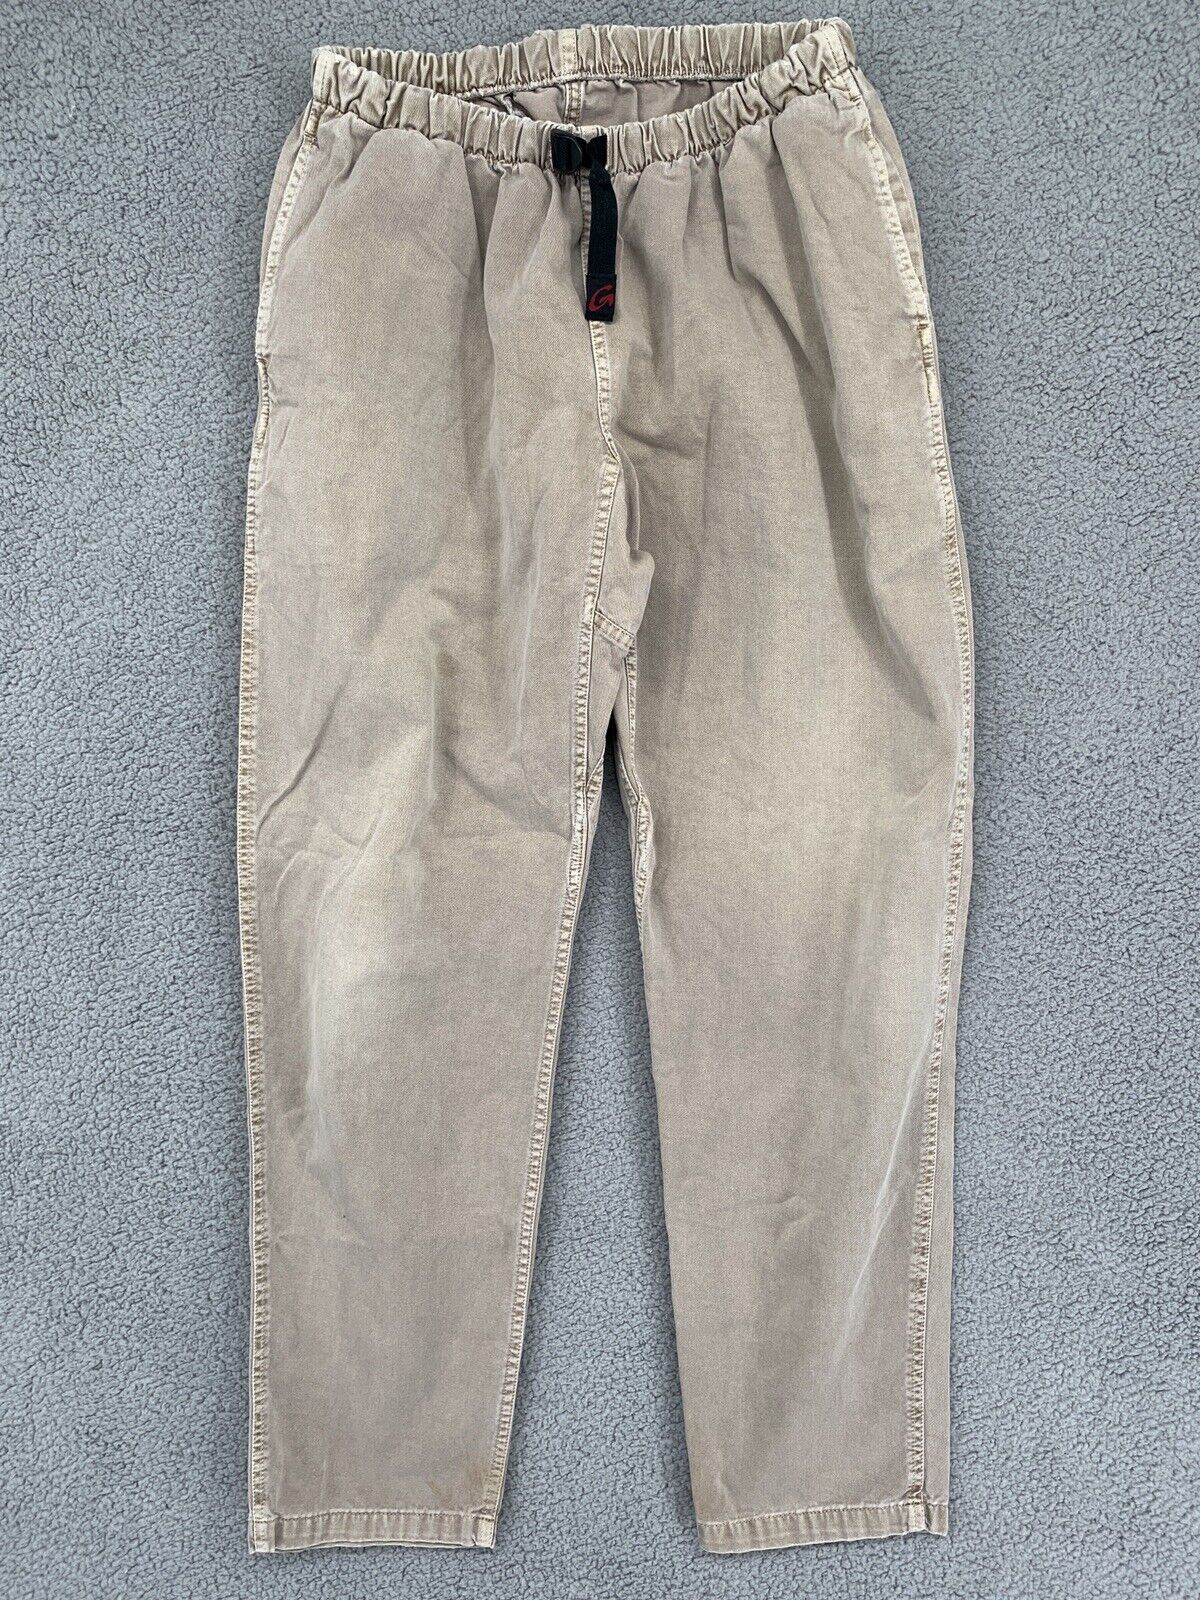 Vintage Gramicci Mens ずっと気になってた Climber Pants Cotton Large Inseam 32